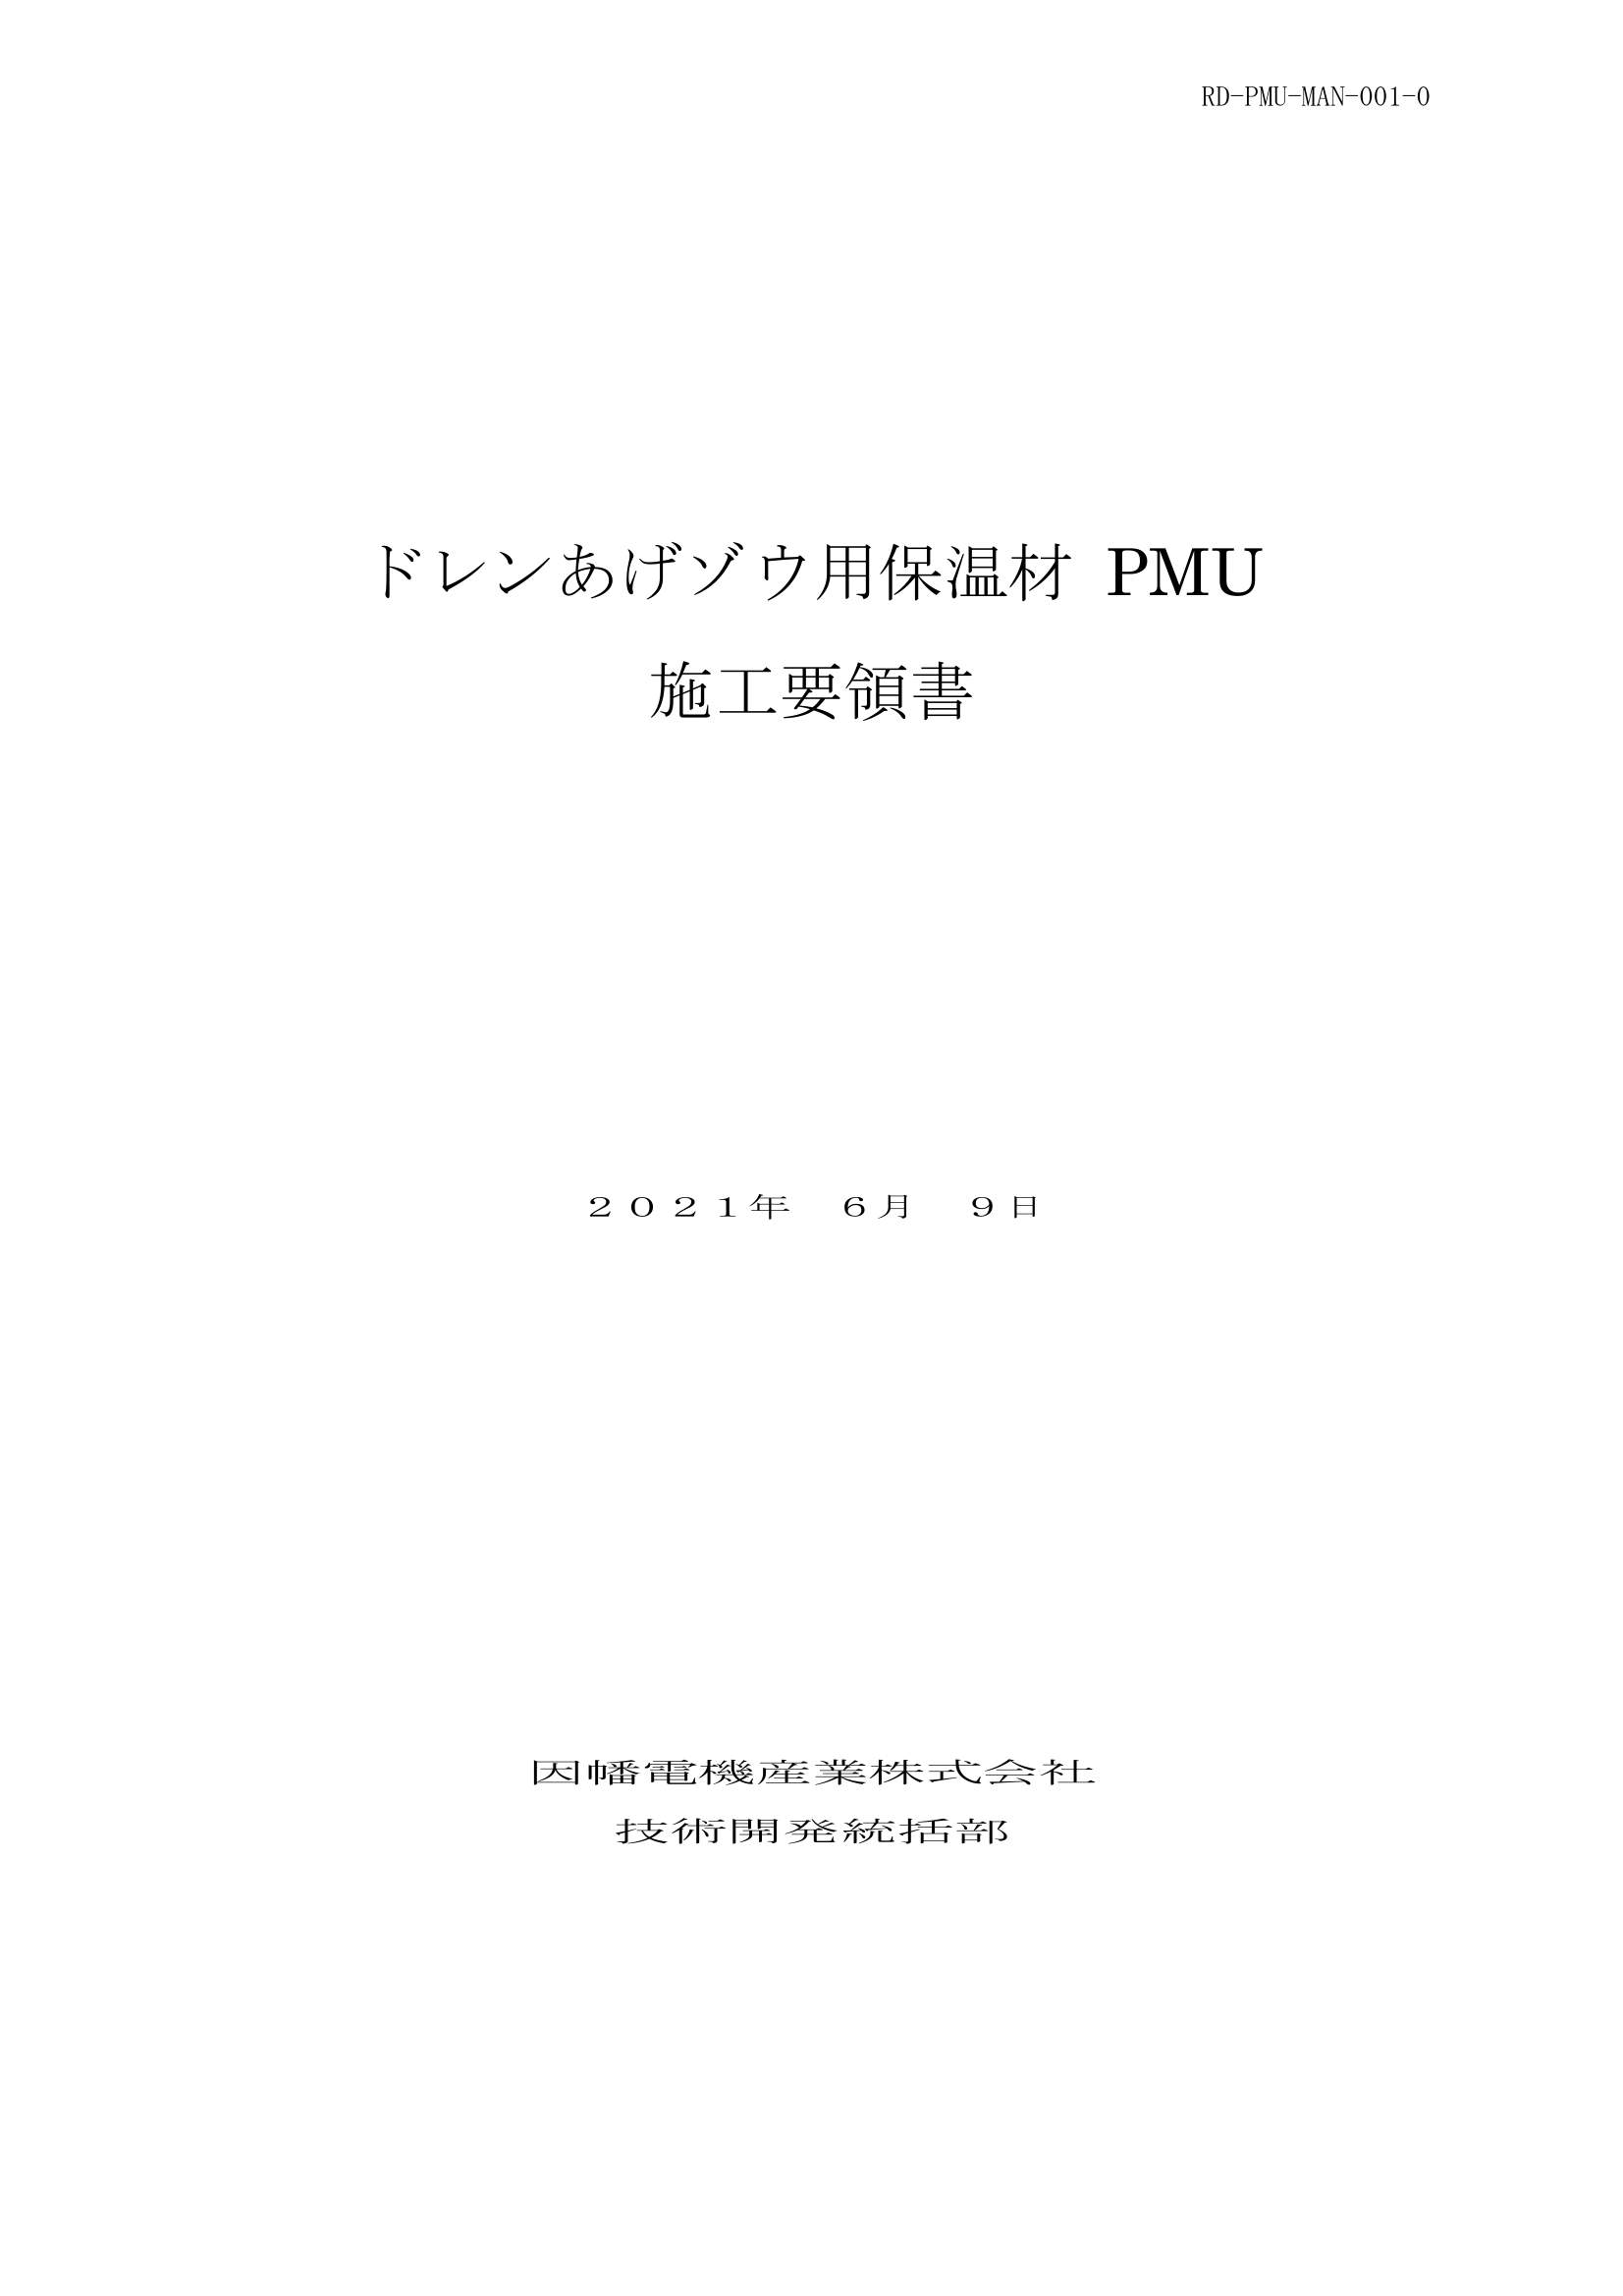 PMU_施工要領書_20210609.pdf